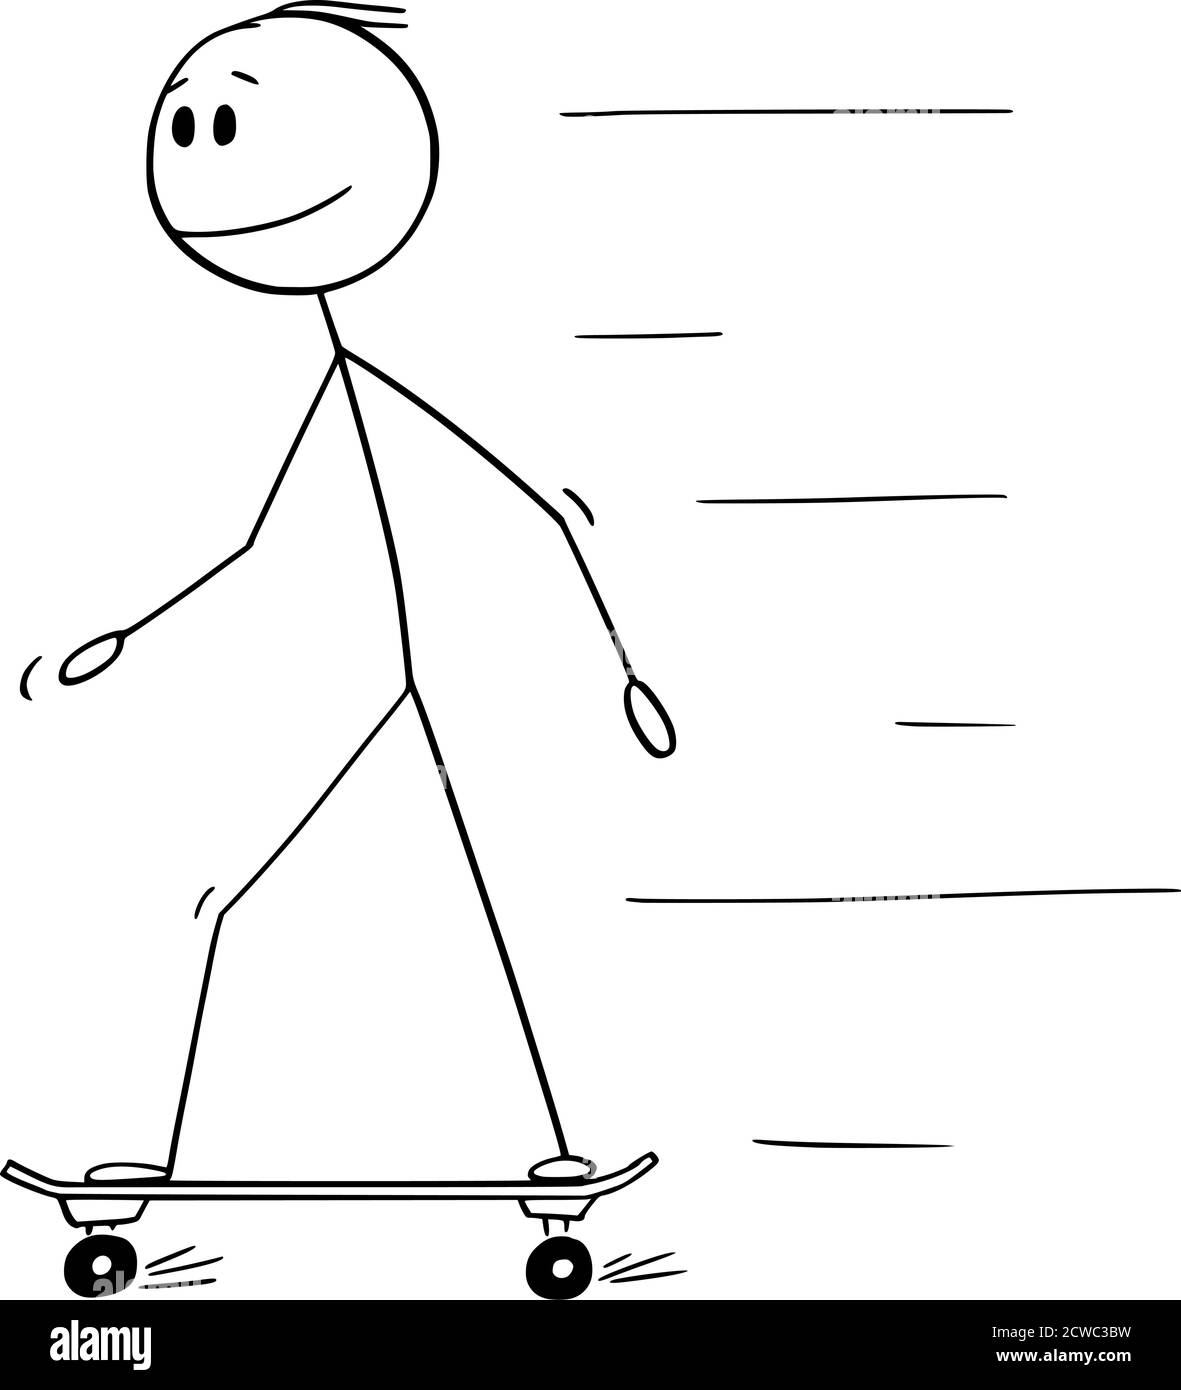 Vector cartoon stick figure drawing conceptual illustration of man, boy, skater or skateboarder riding or skateboarding on skateboard. Stock Vector